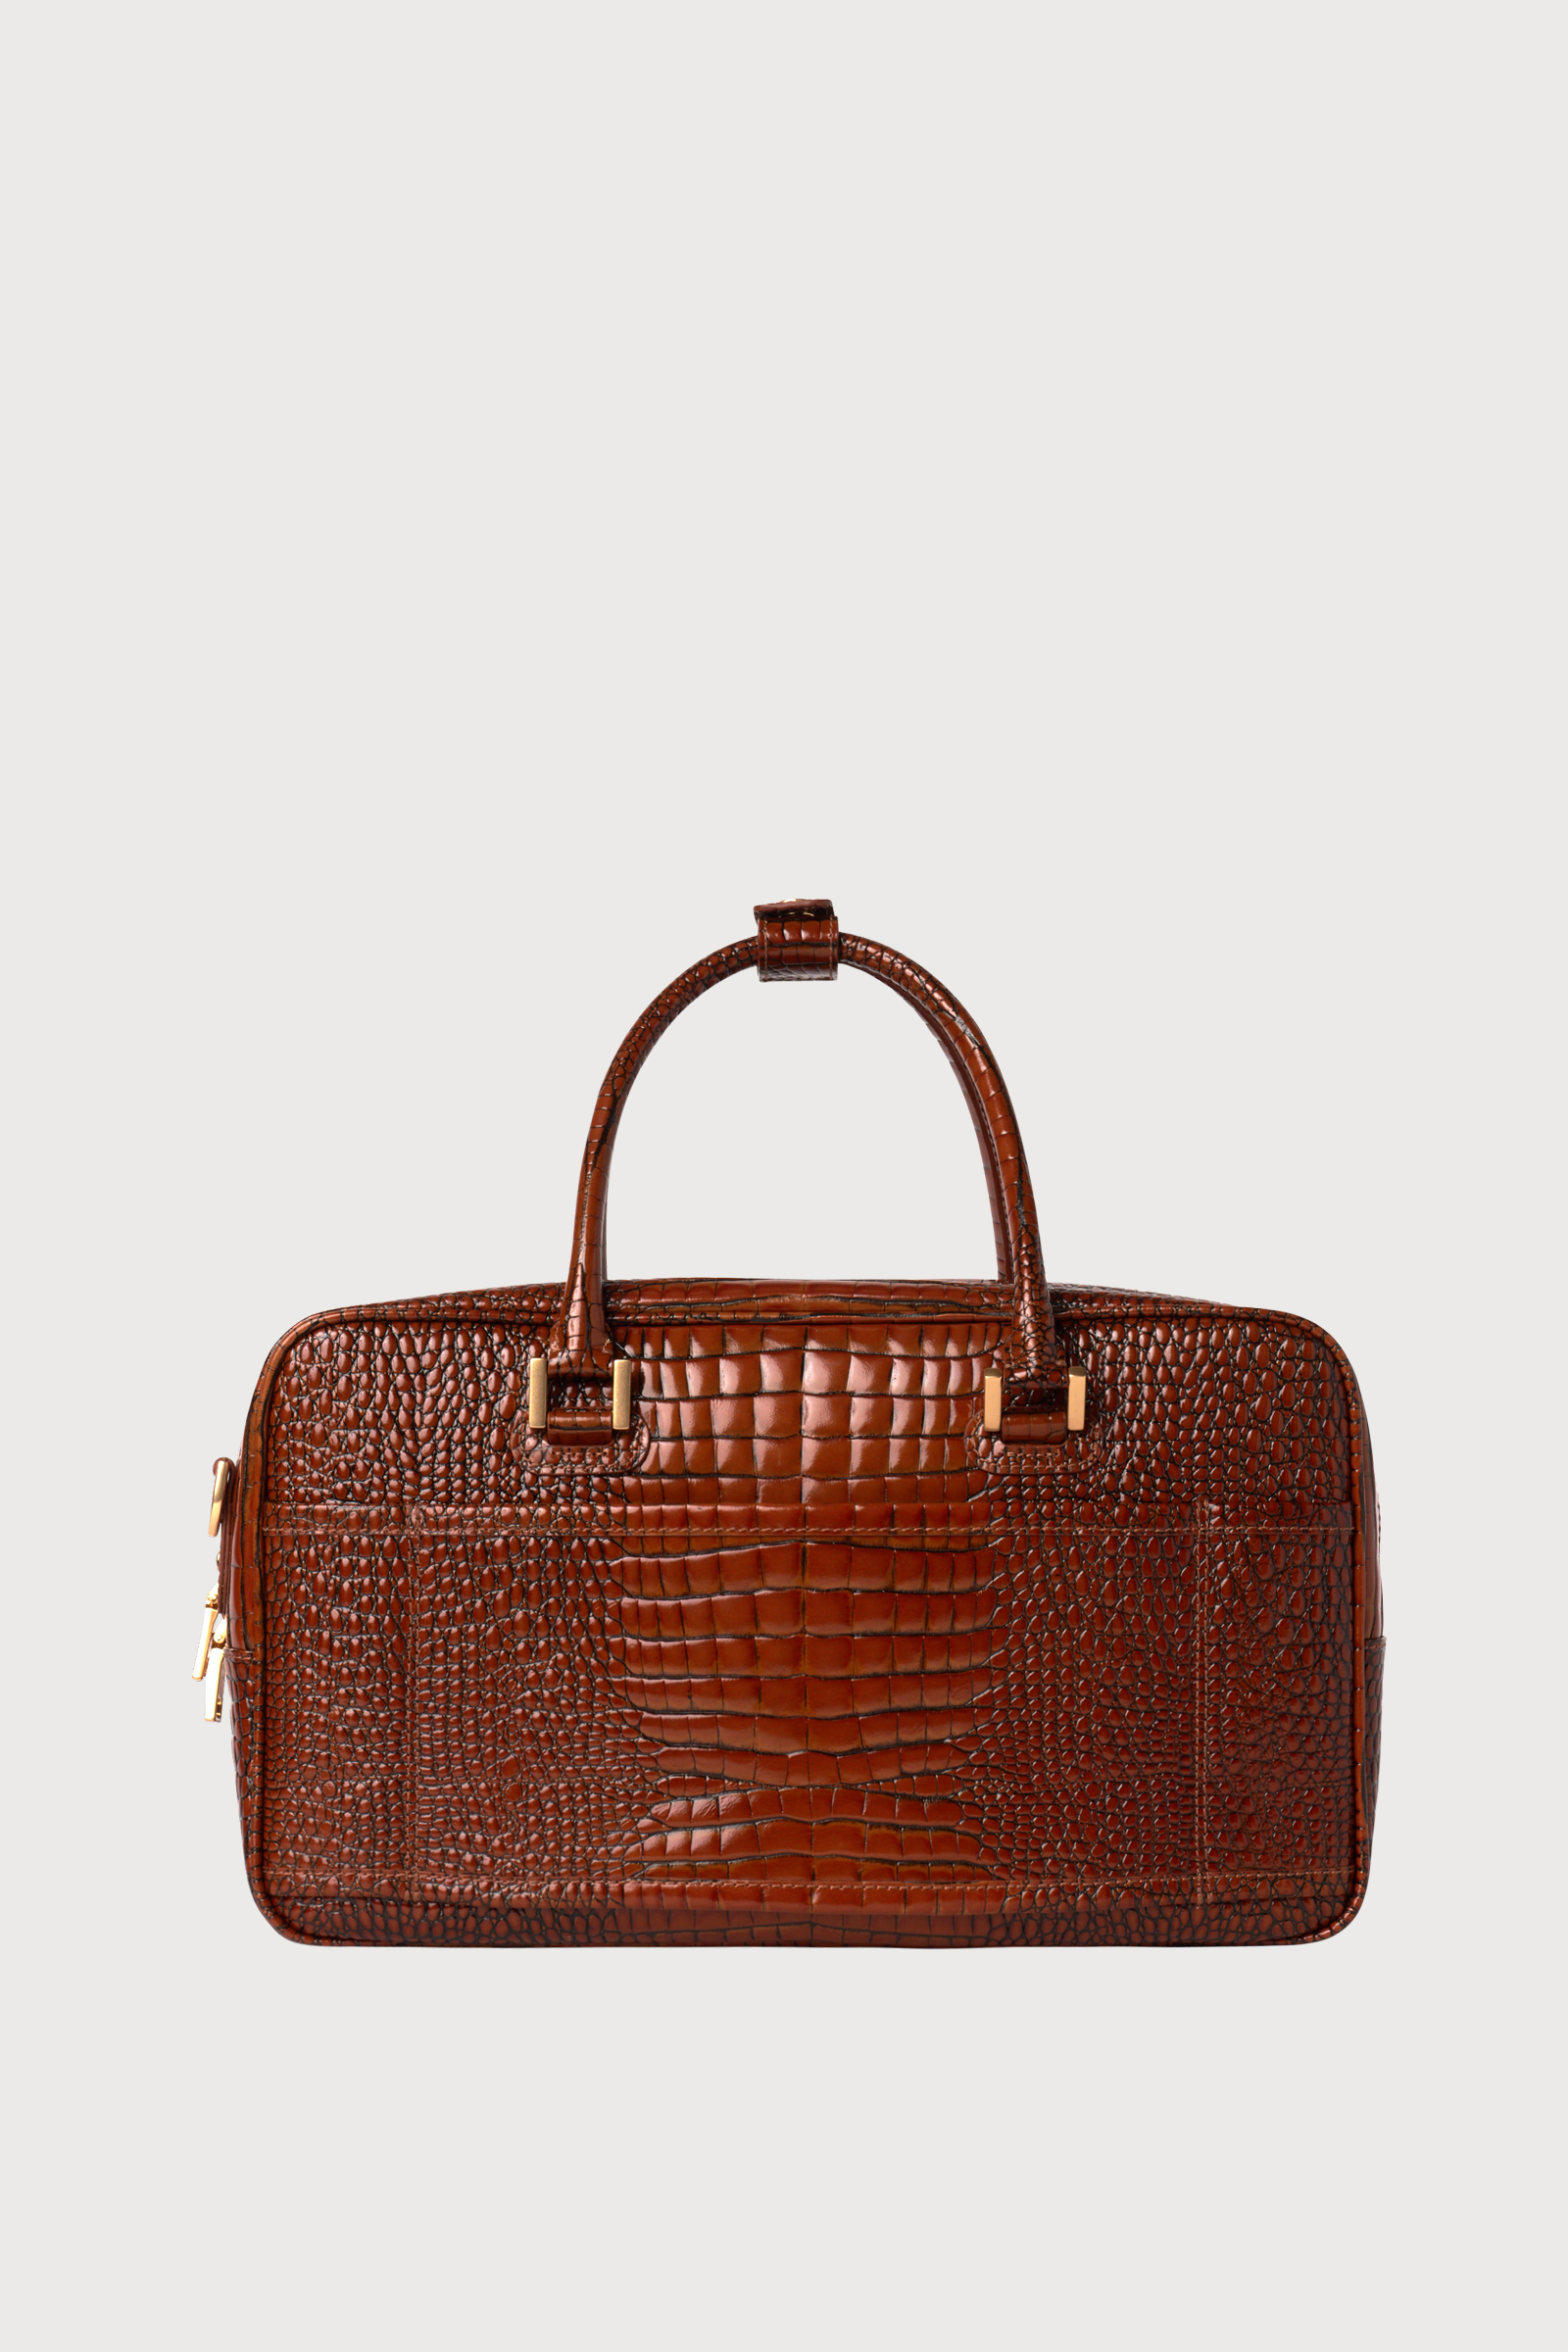 Part.5 Travel bag (croc brown)